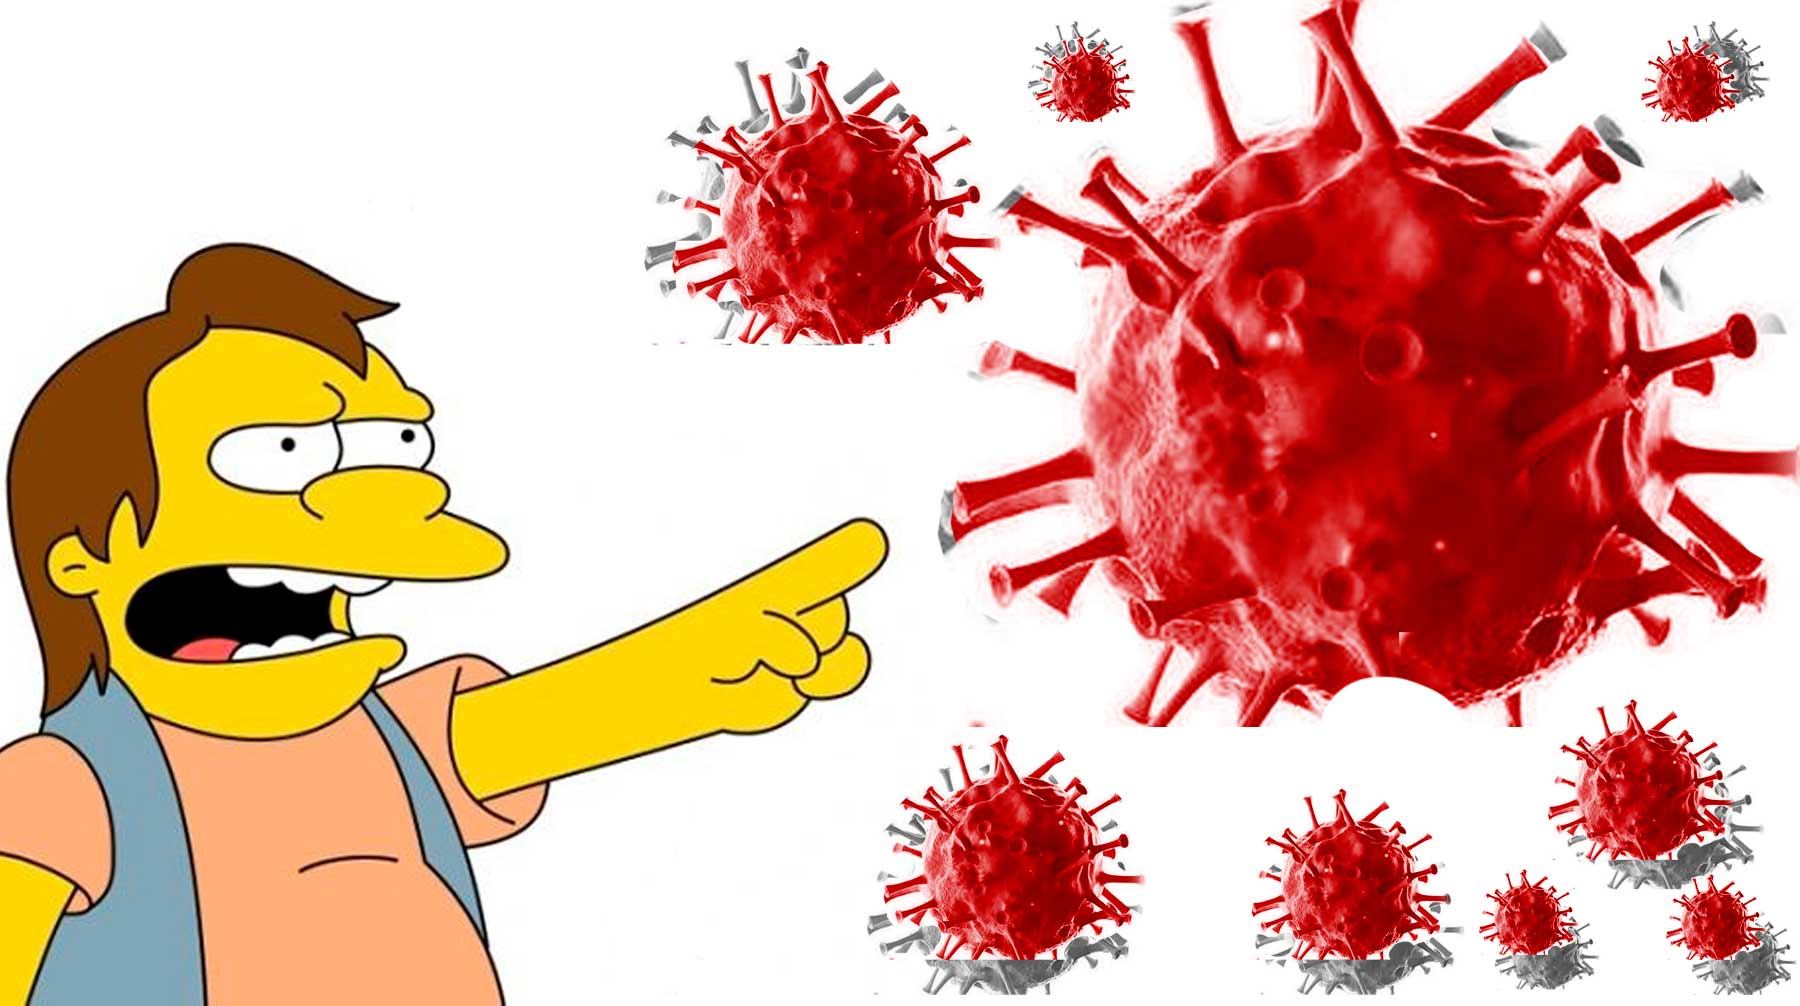 Шутки про коронавирус продолжают распространятся по Сети, шутки про средства защиты, шутки про вирус